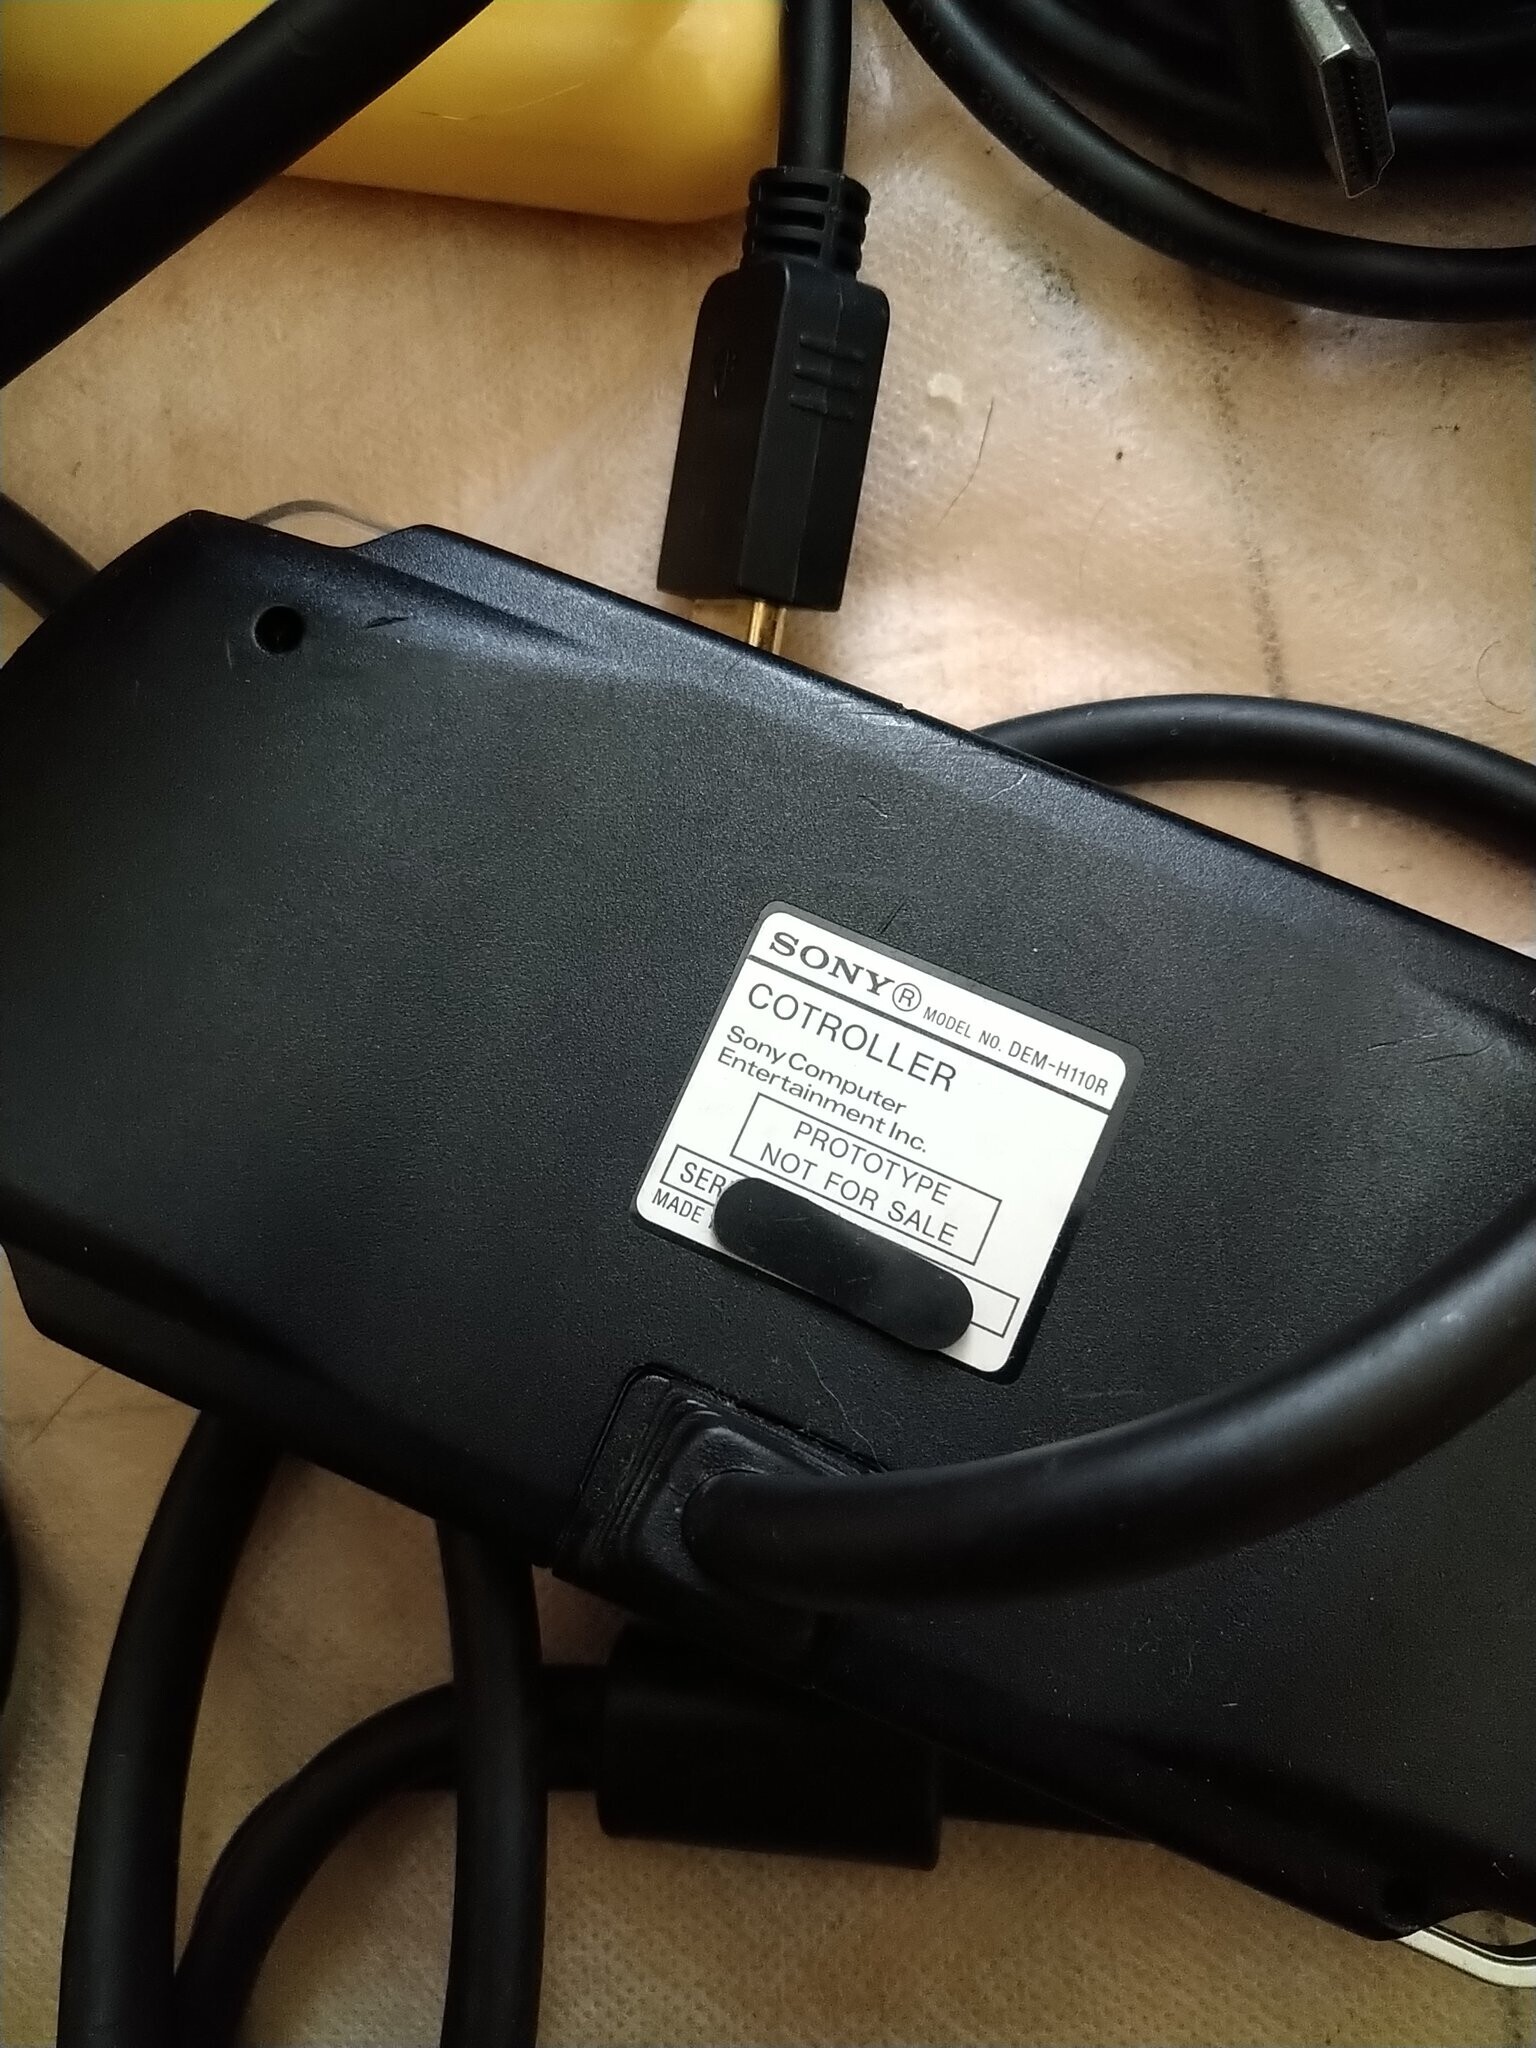  Sony PSP DEM-H110R Prototype Controller